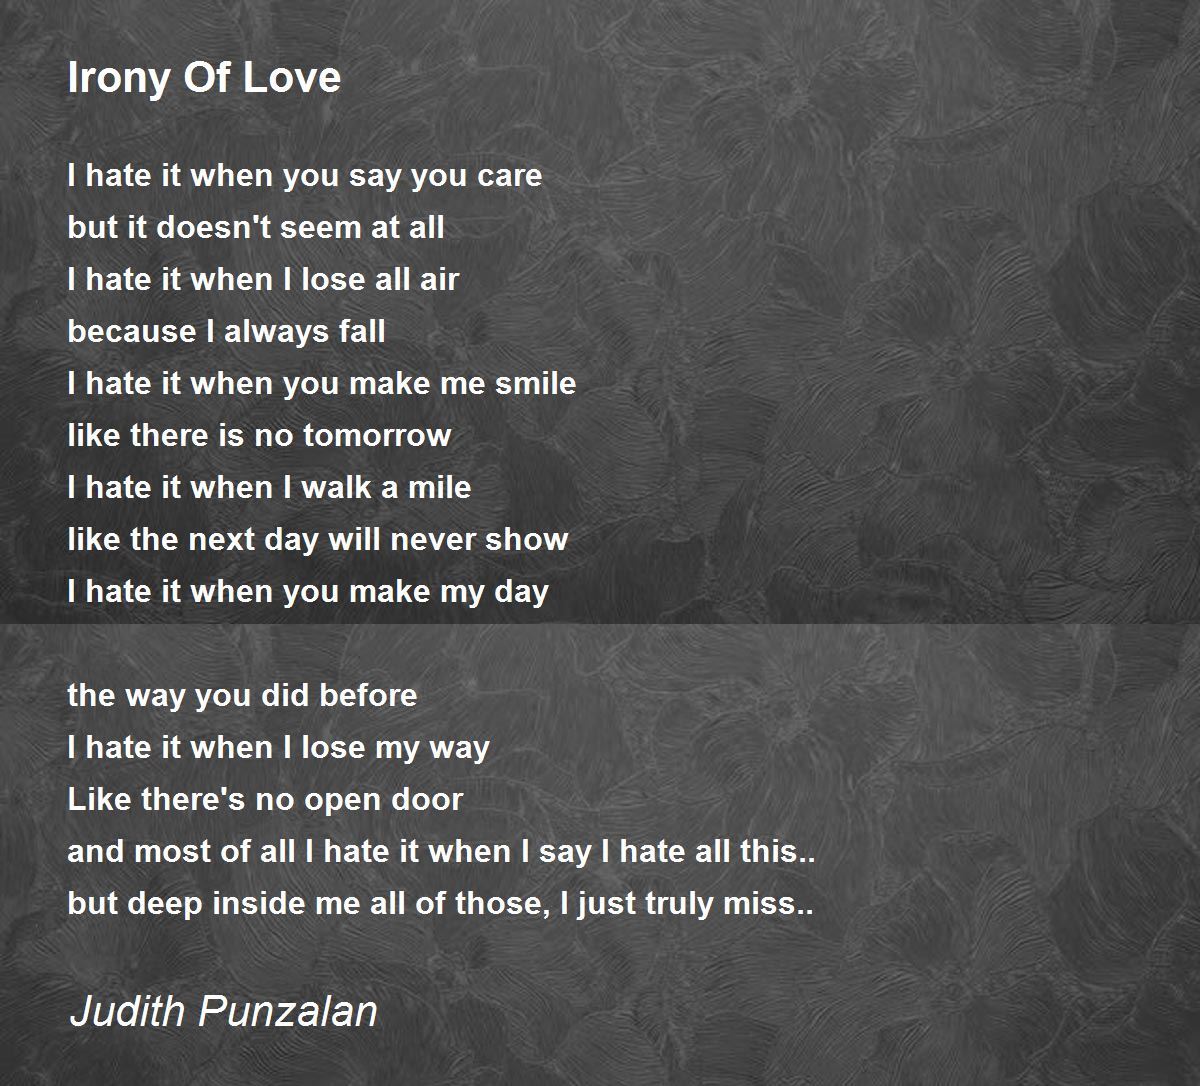 Irony Of Love Poem By Judith Punzalan